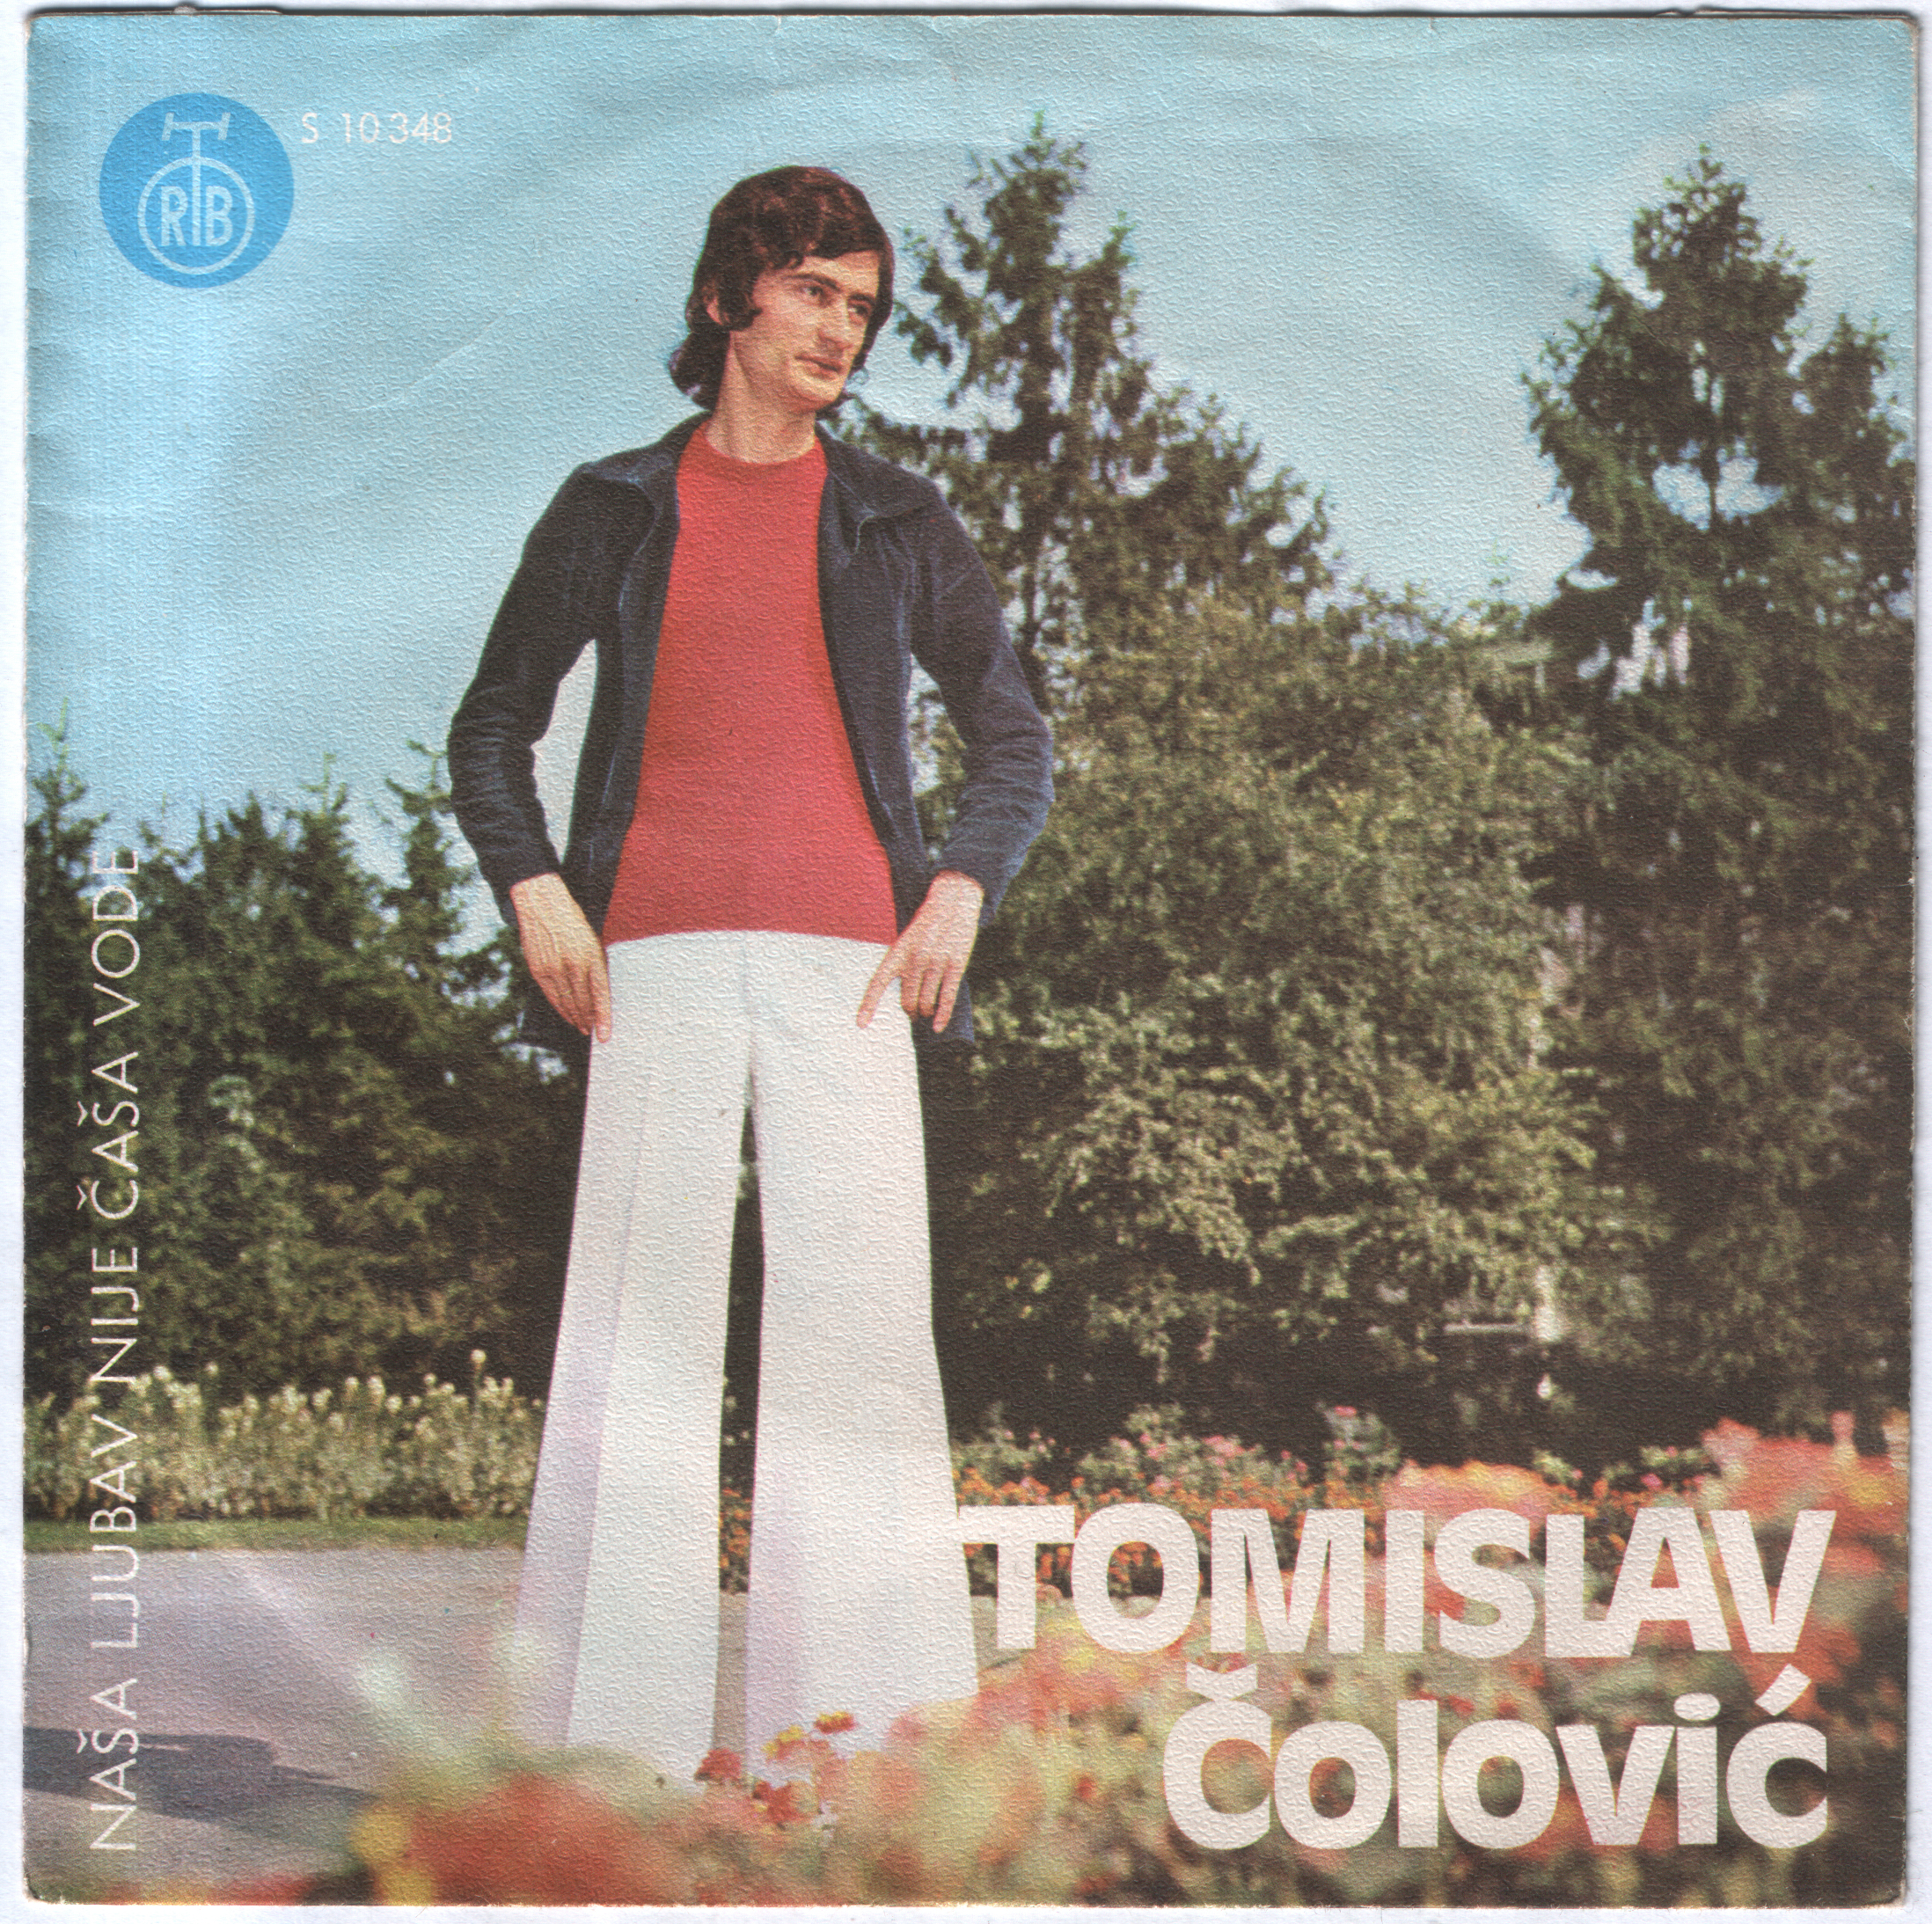 Tomislav Colovic 1975 P